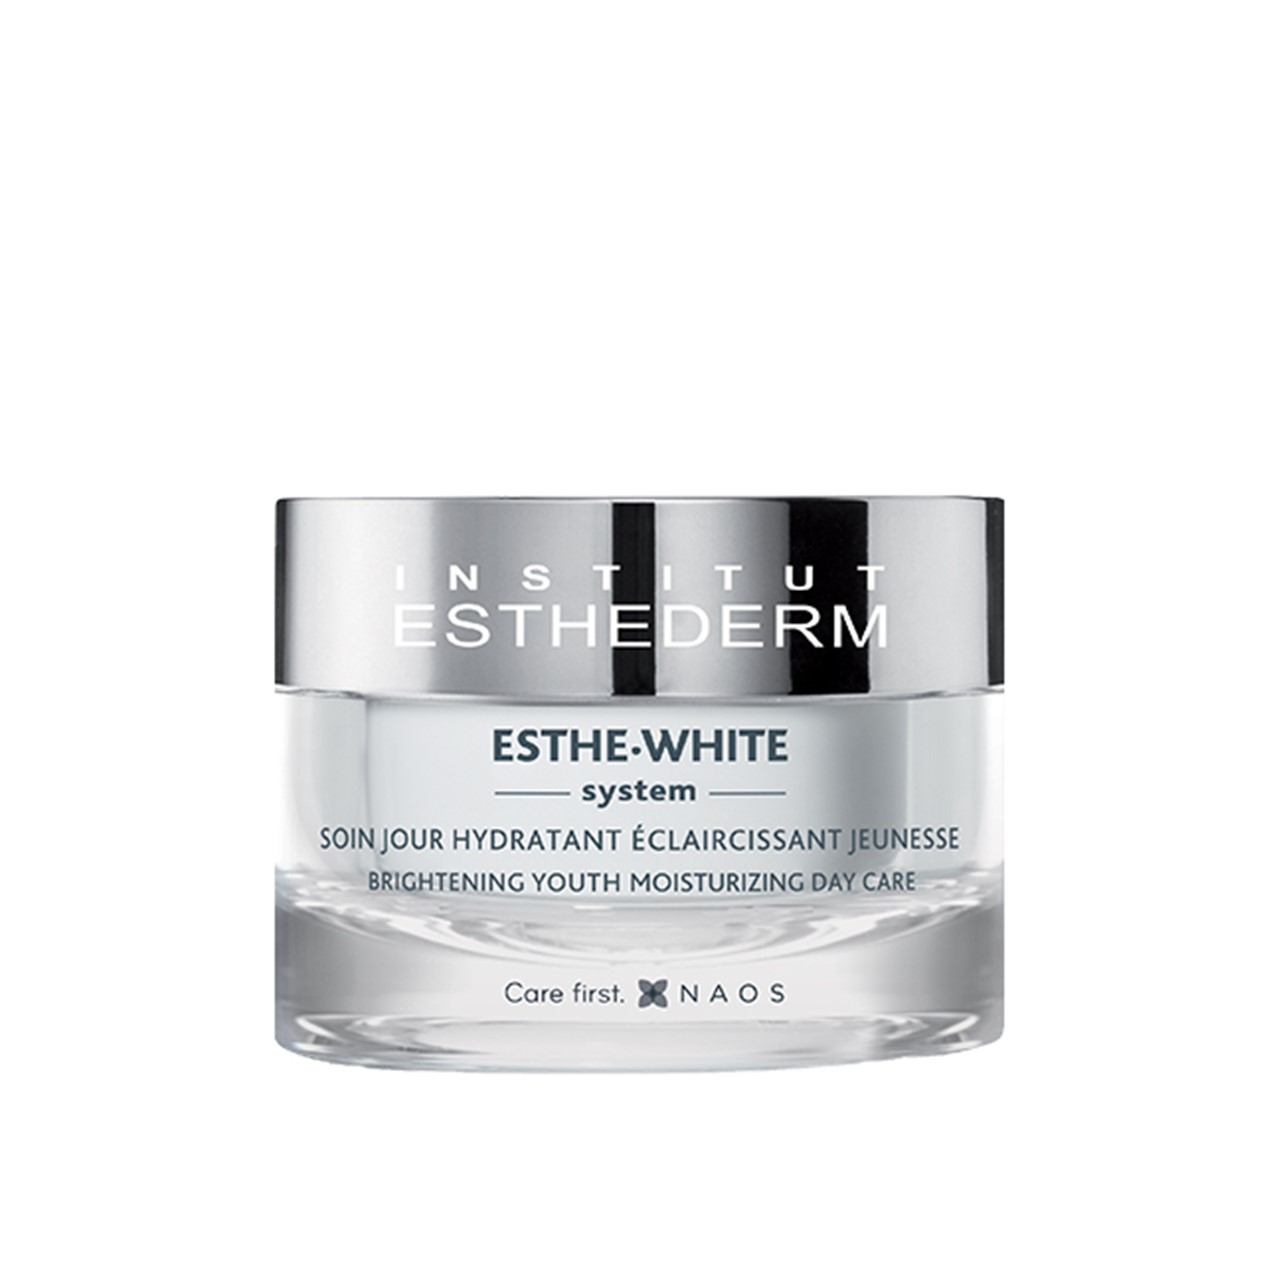 Esthederm Esthe-White Brightening Youth Moisturizing Day Care 50ml (1.69fl oz)